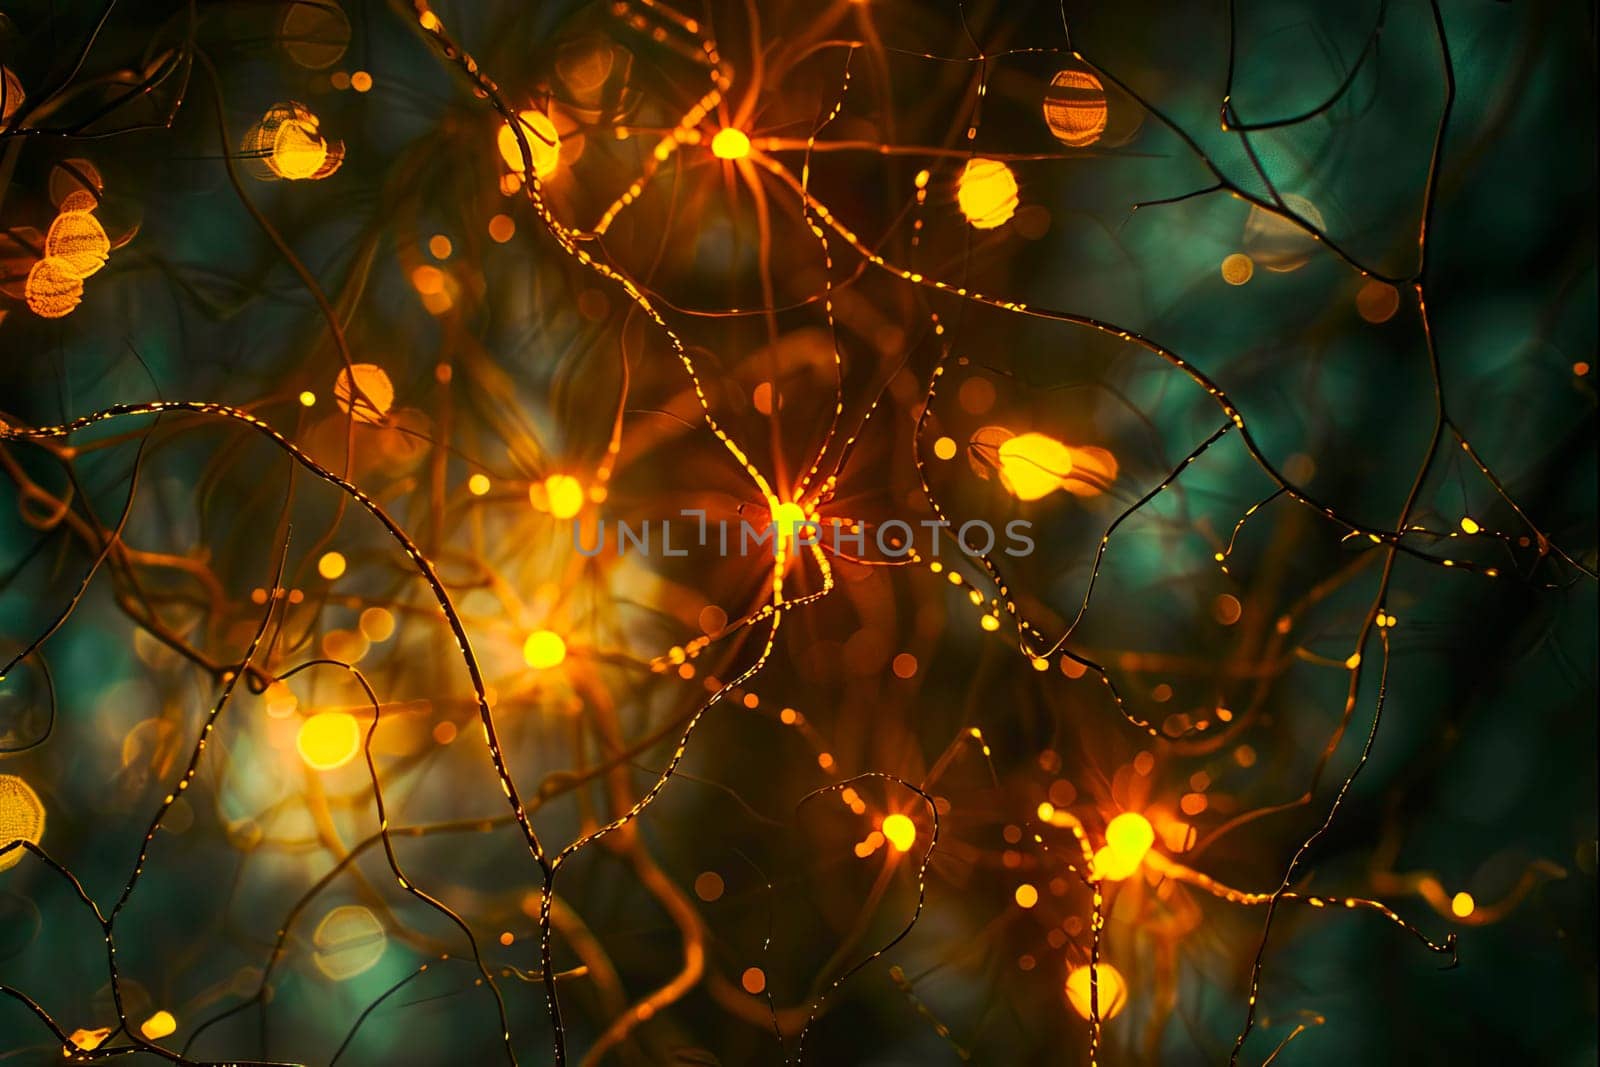 Neurons firing, showcasing the complexity of human brain activity.